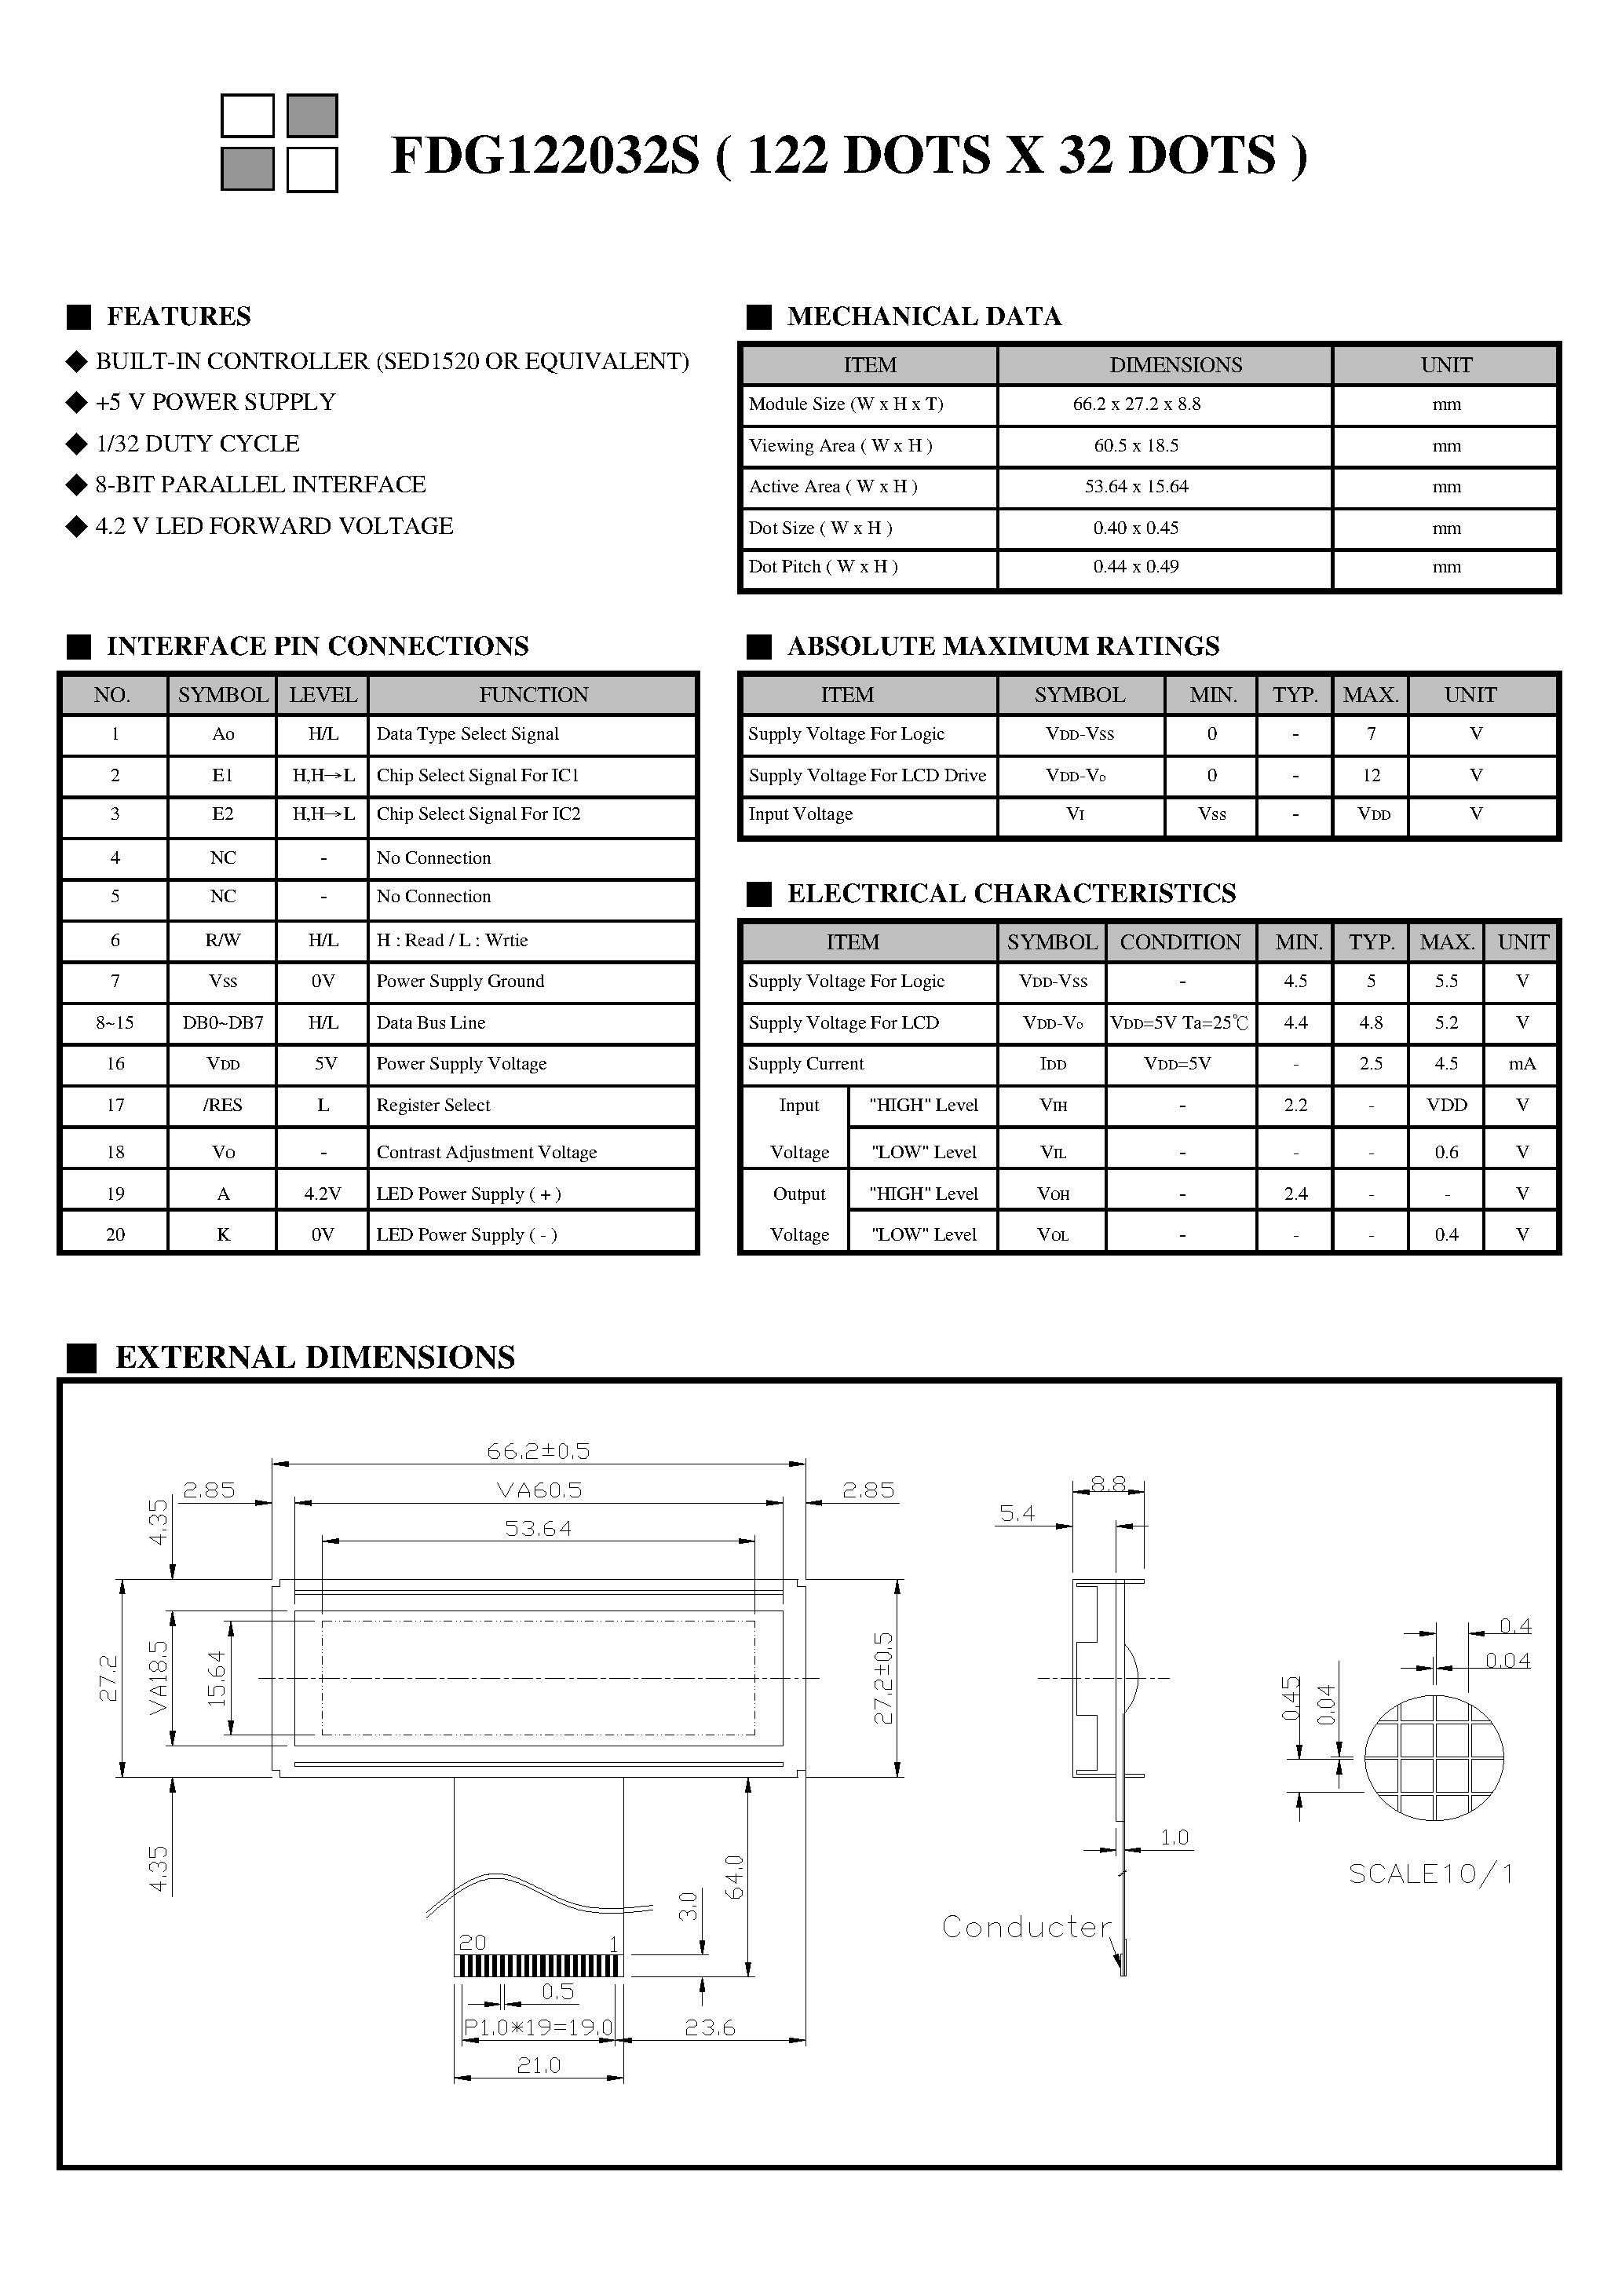 Datasheet FDG122032S - Monochrome Lcd Module page 2